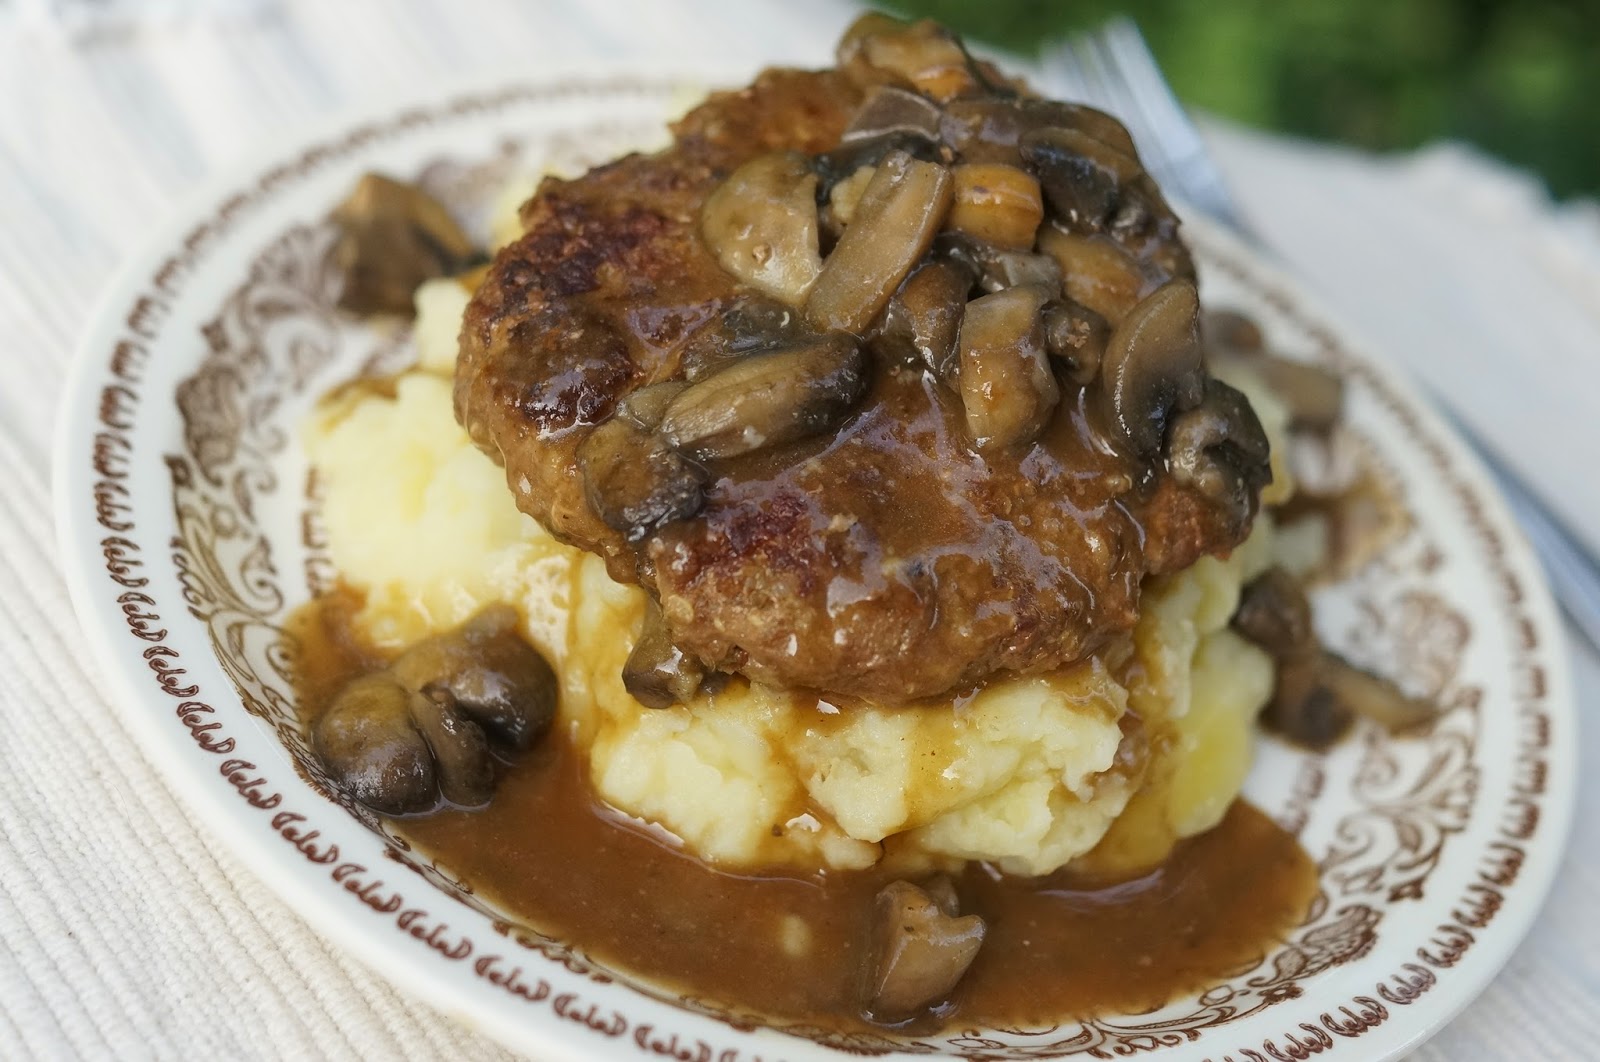 In the Kitchen with Jenny: Salisbury Steak and Mushroom Gravy